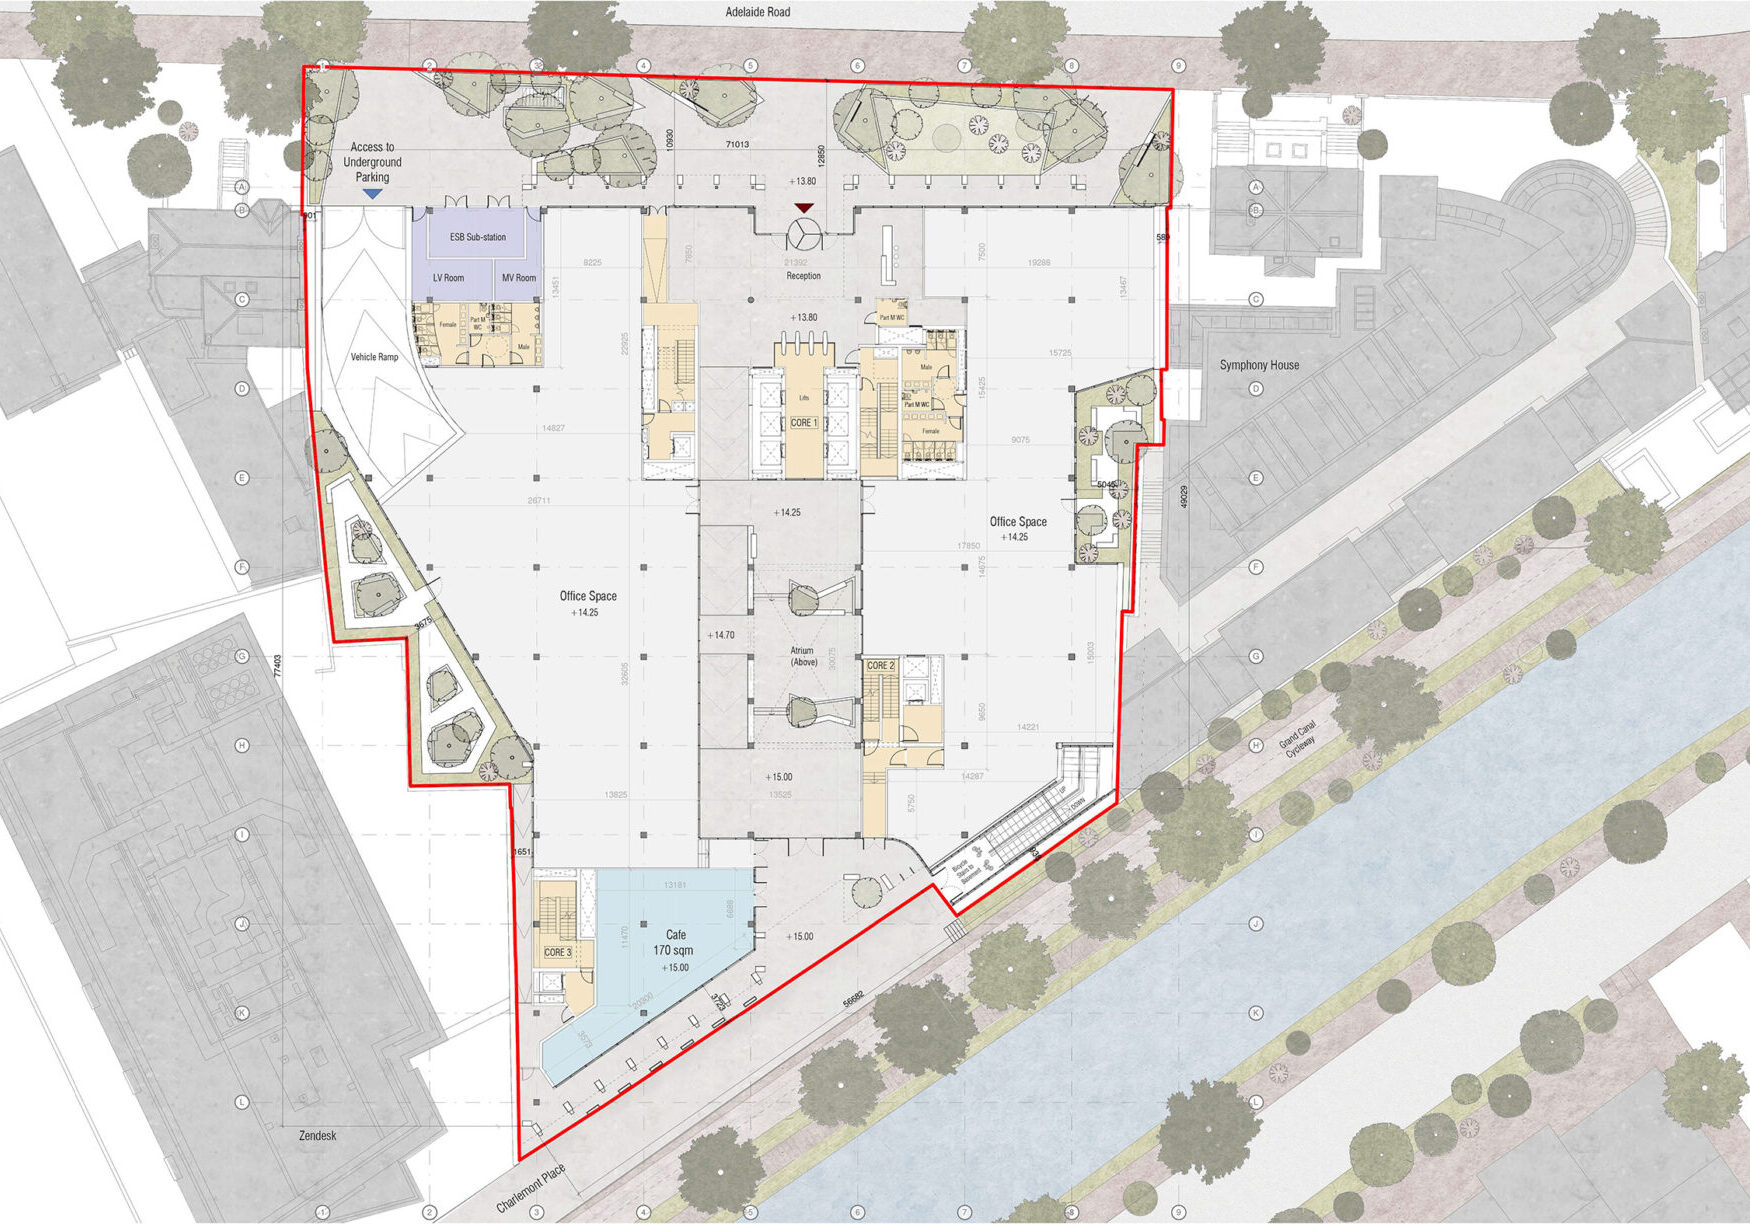 Plus-Architecture-Adelaide-Road-Ground-Floor-Plan-2